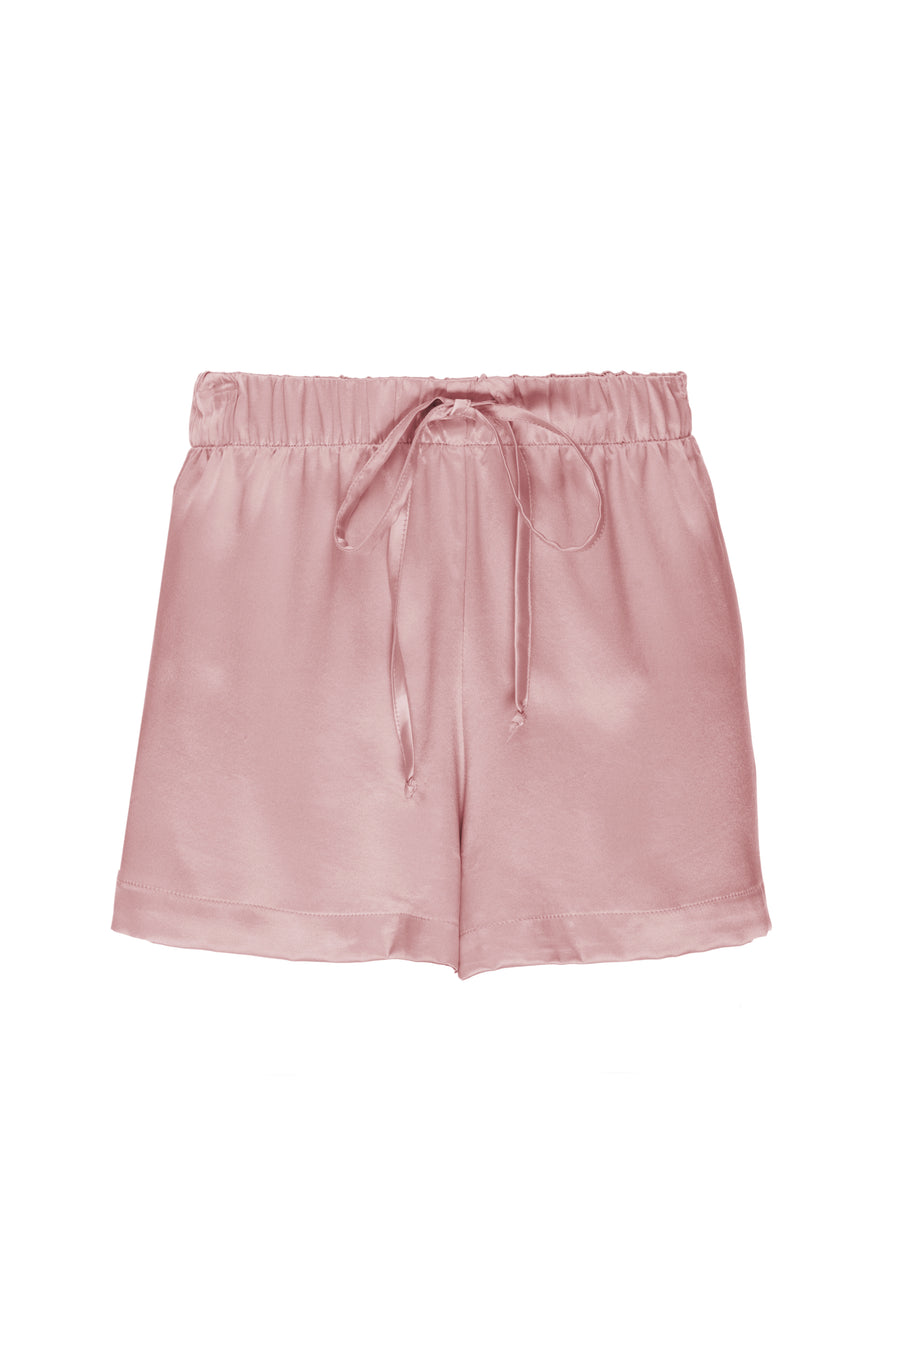 Silk Charmeuse Shorts: Rose Gold